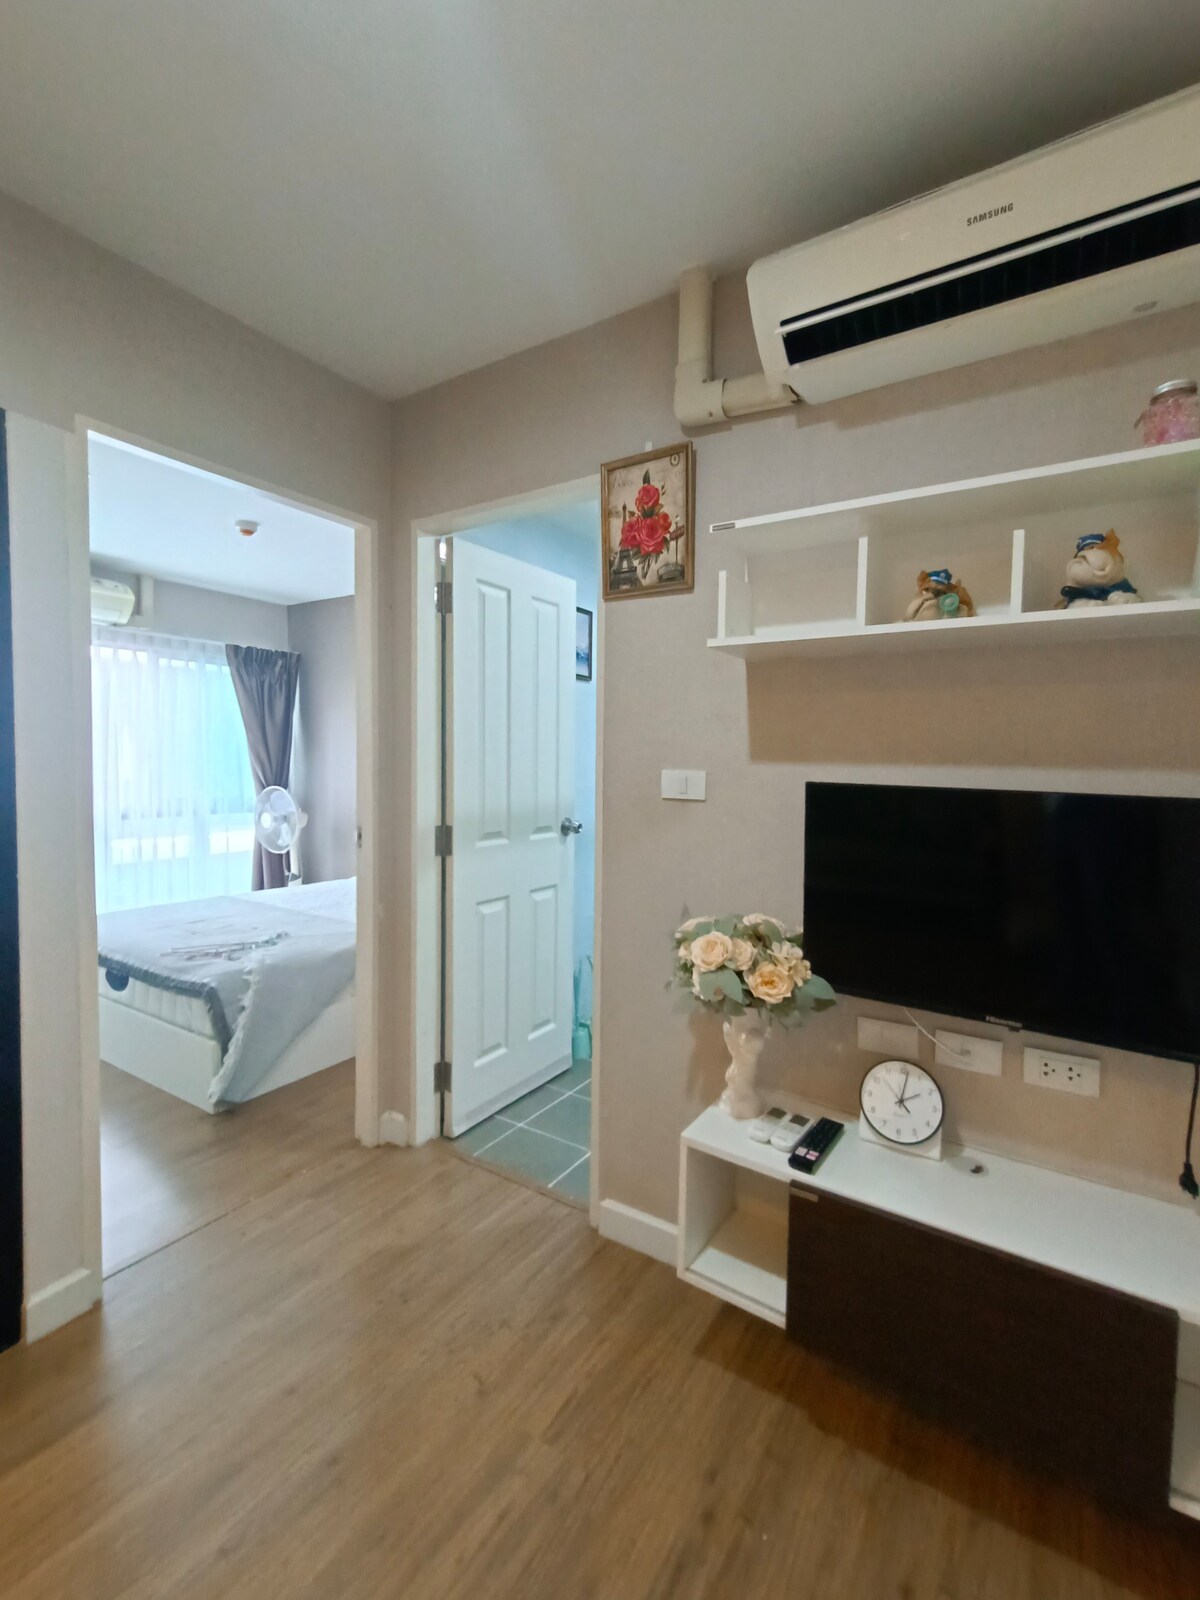 Apartment 1 bedroom, Ngamwongwan Road, Bang Khen Sub-district, Nonthaburi Province